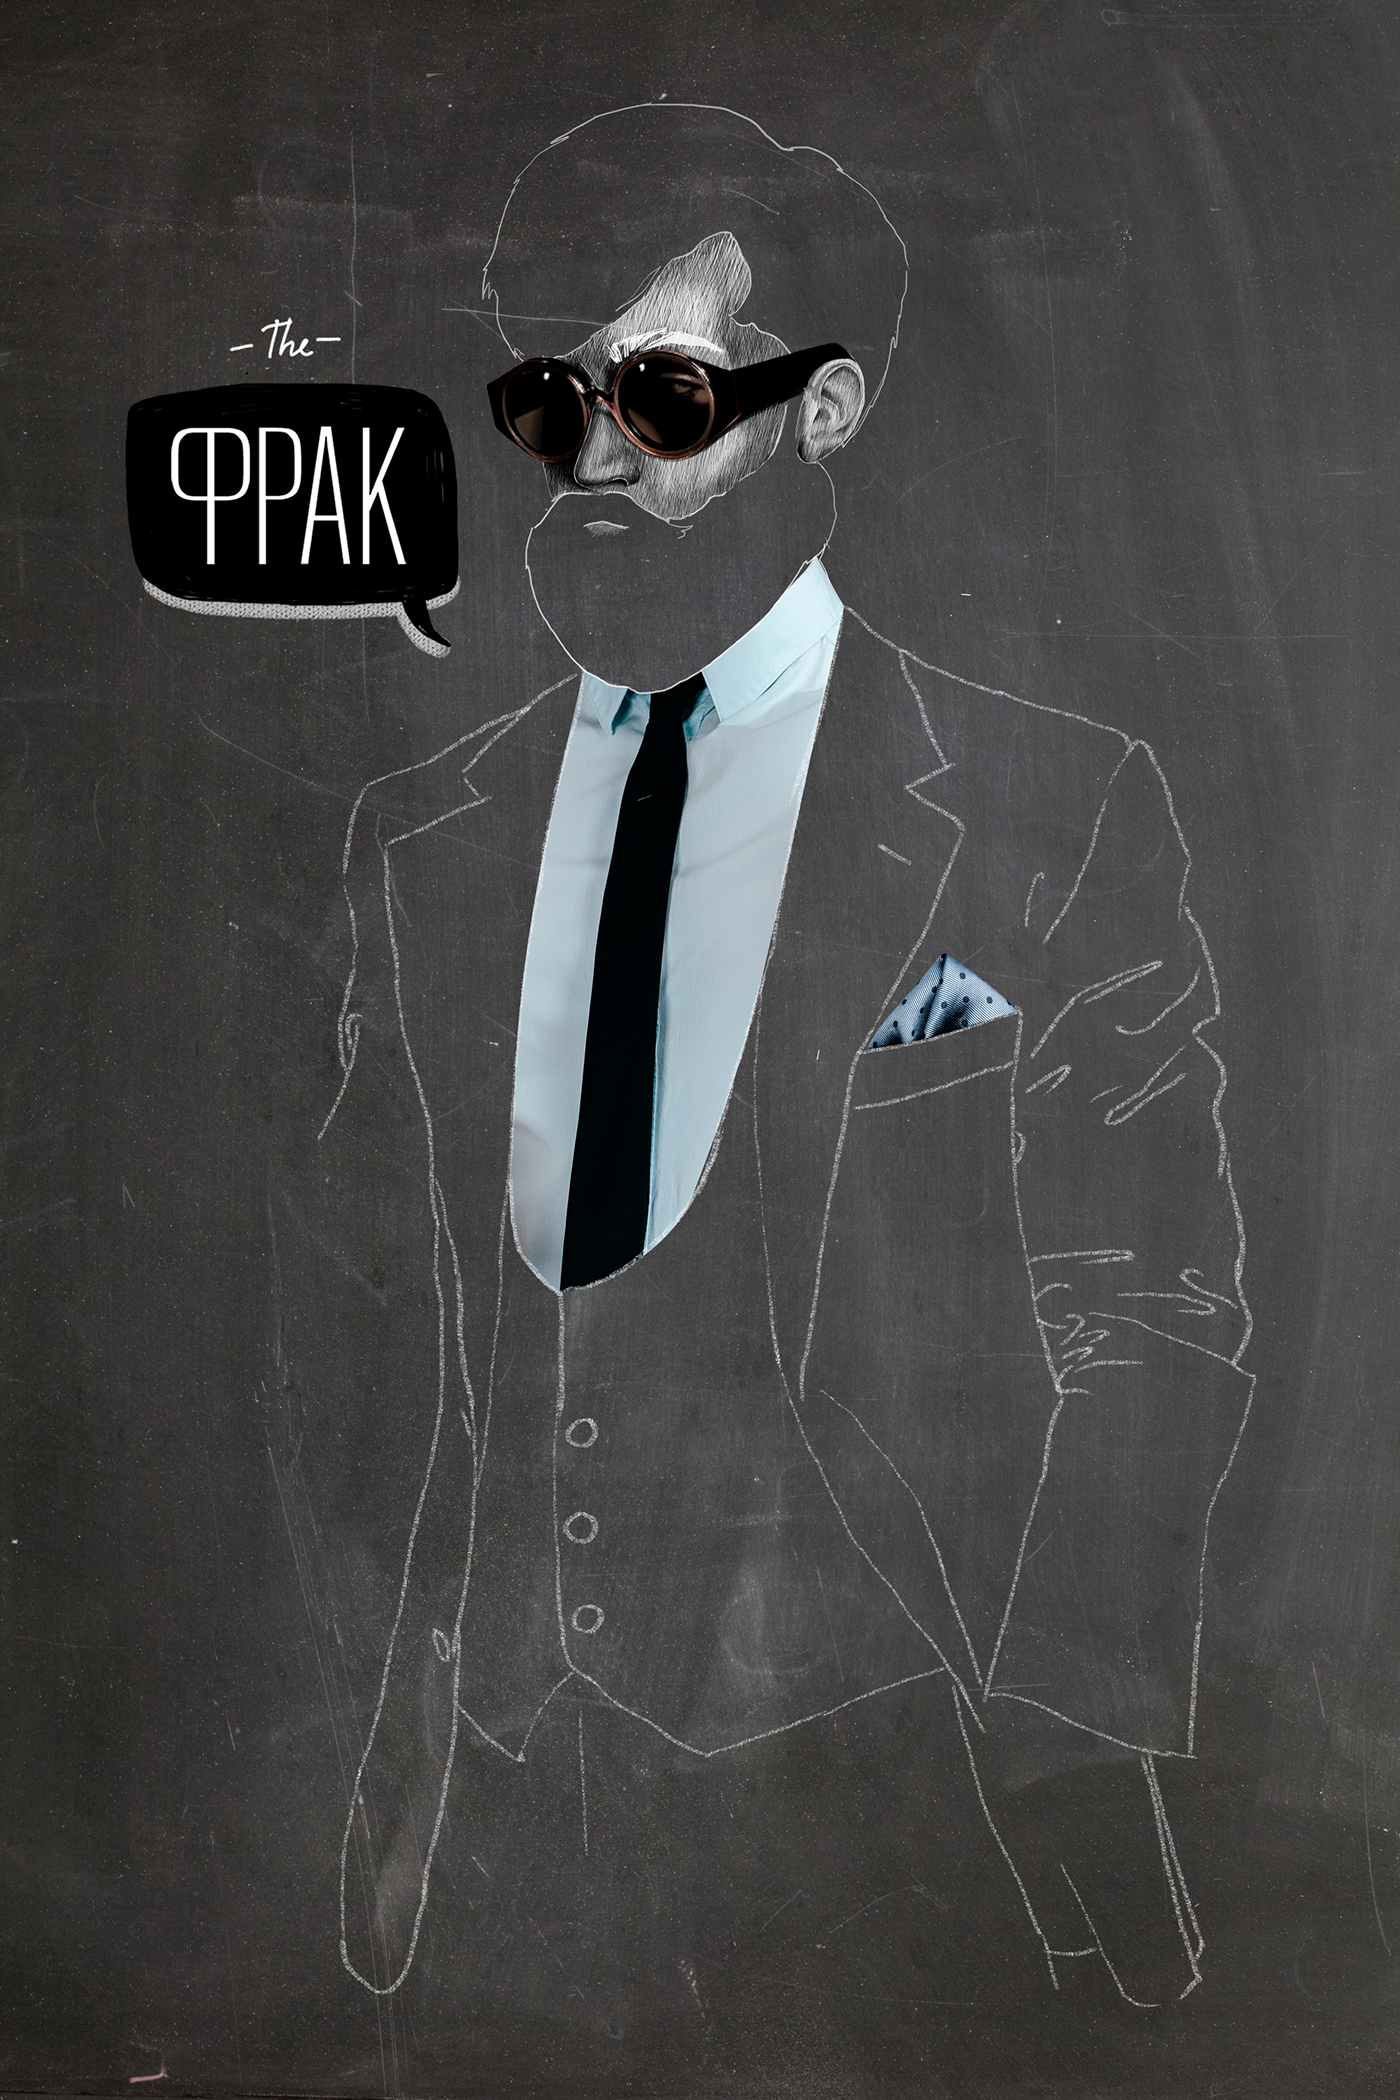 Corporate Identity shop face person blackboard chalk Style accessories man figure